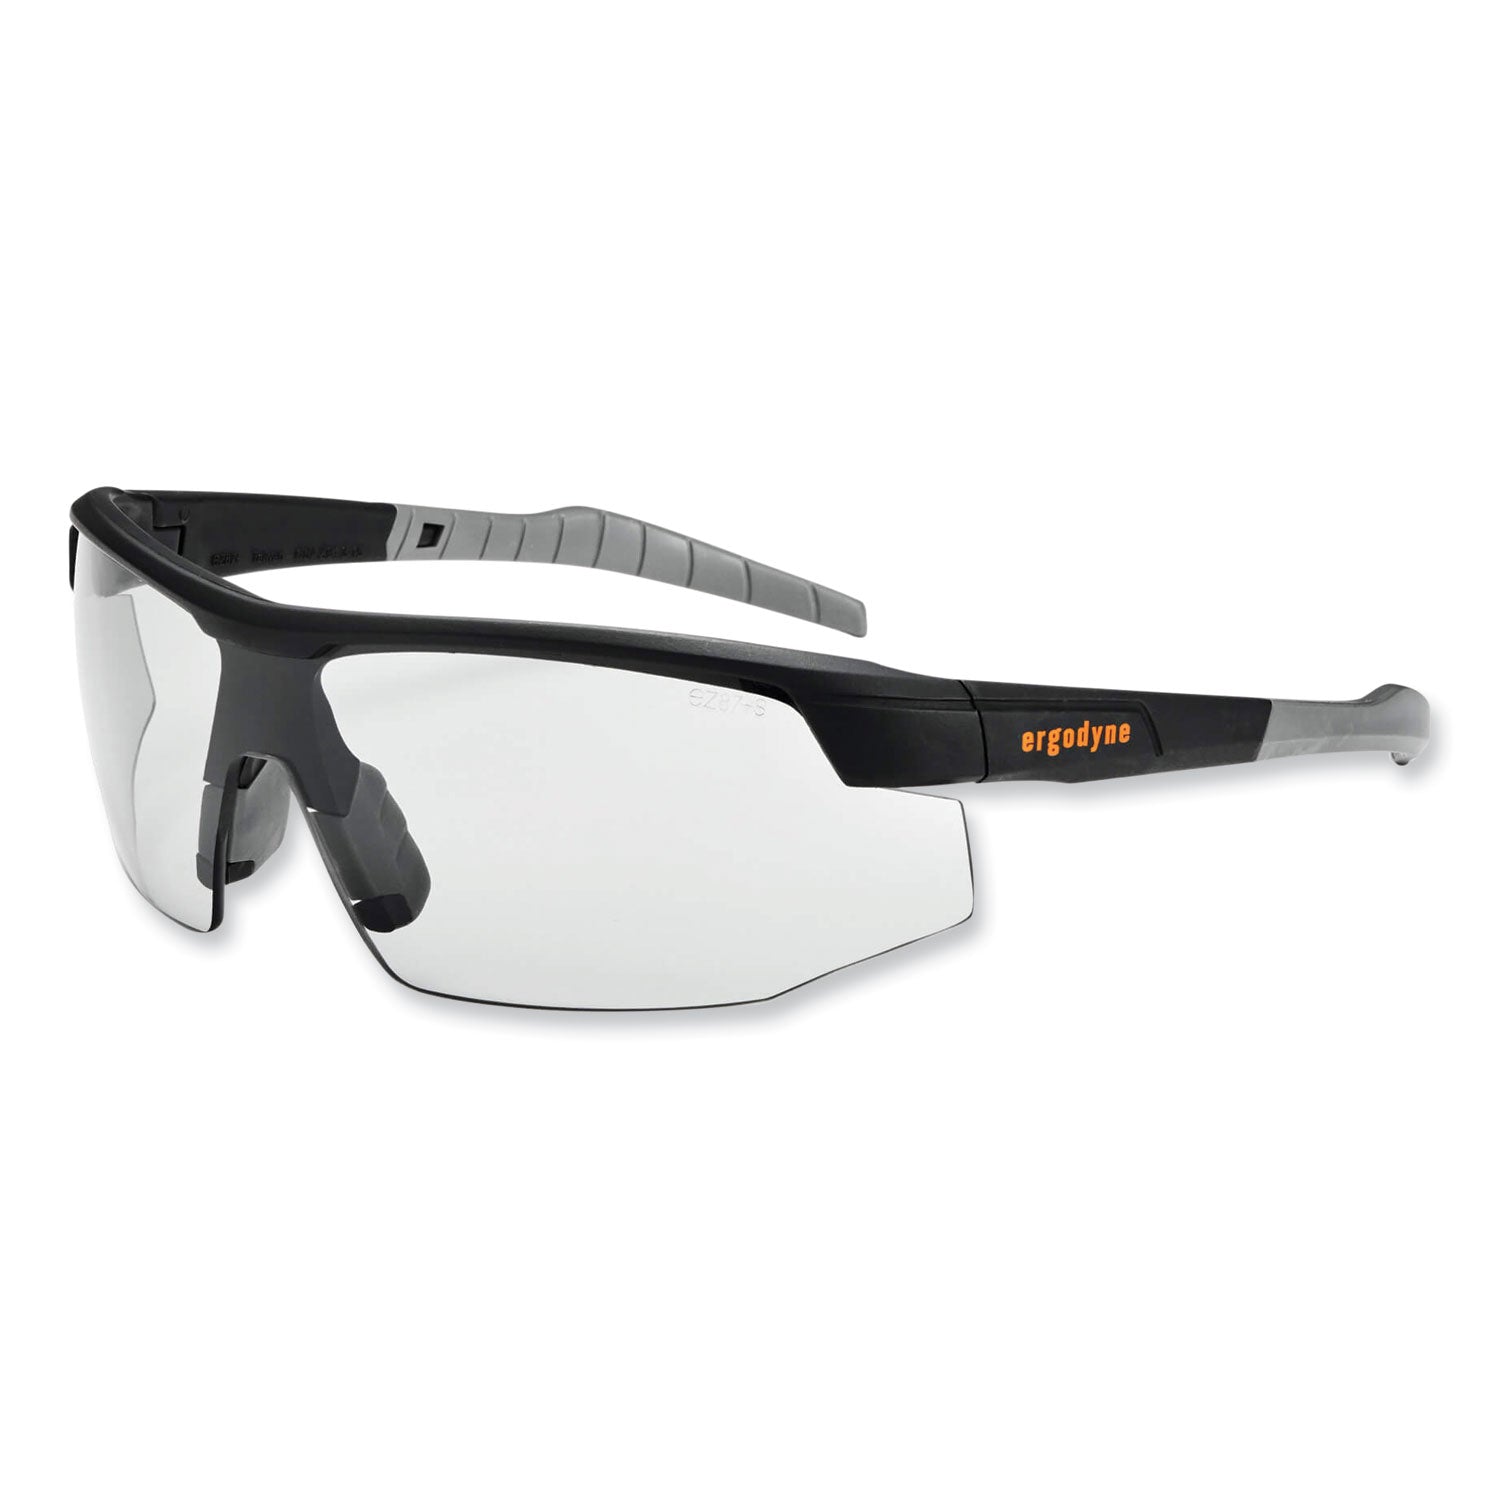 skullerz-skoll-safety-glasses-matte-black-nylon-impact-frame-indoor-outdoor-polycarbonate-lens-ships-in-1-3-business-days_ego59080 - 1